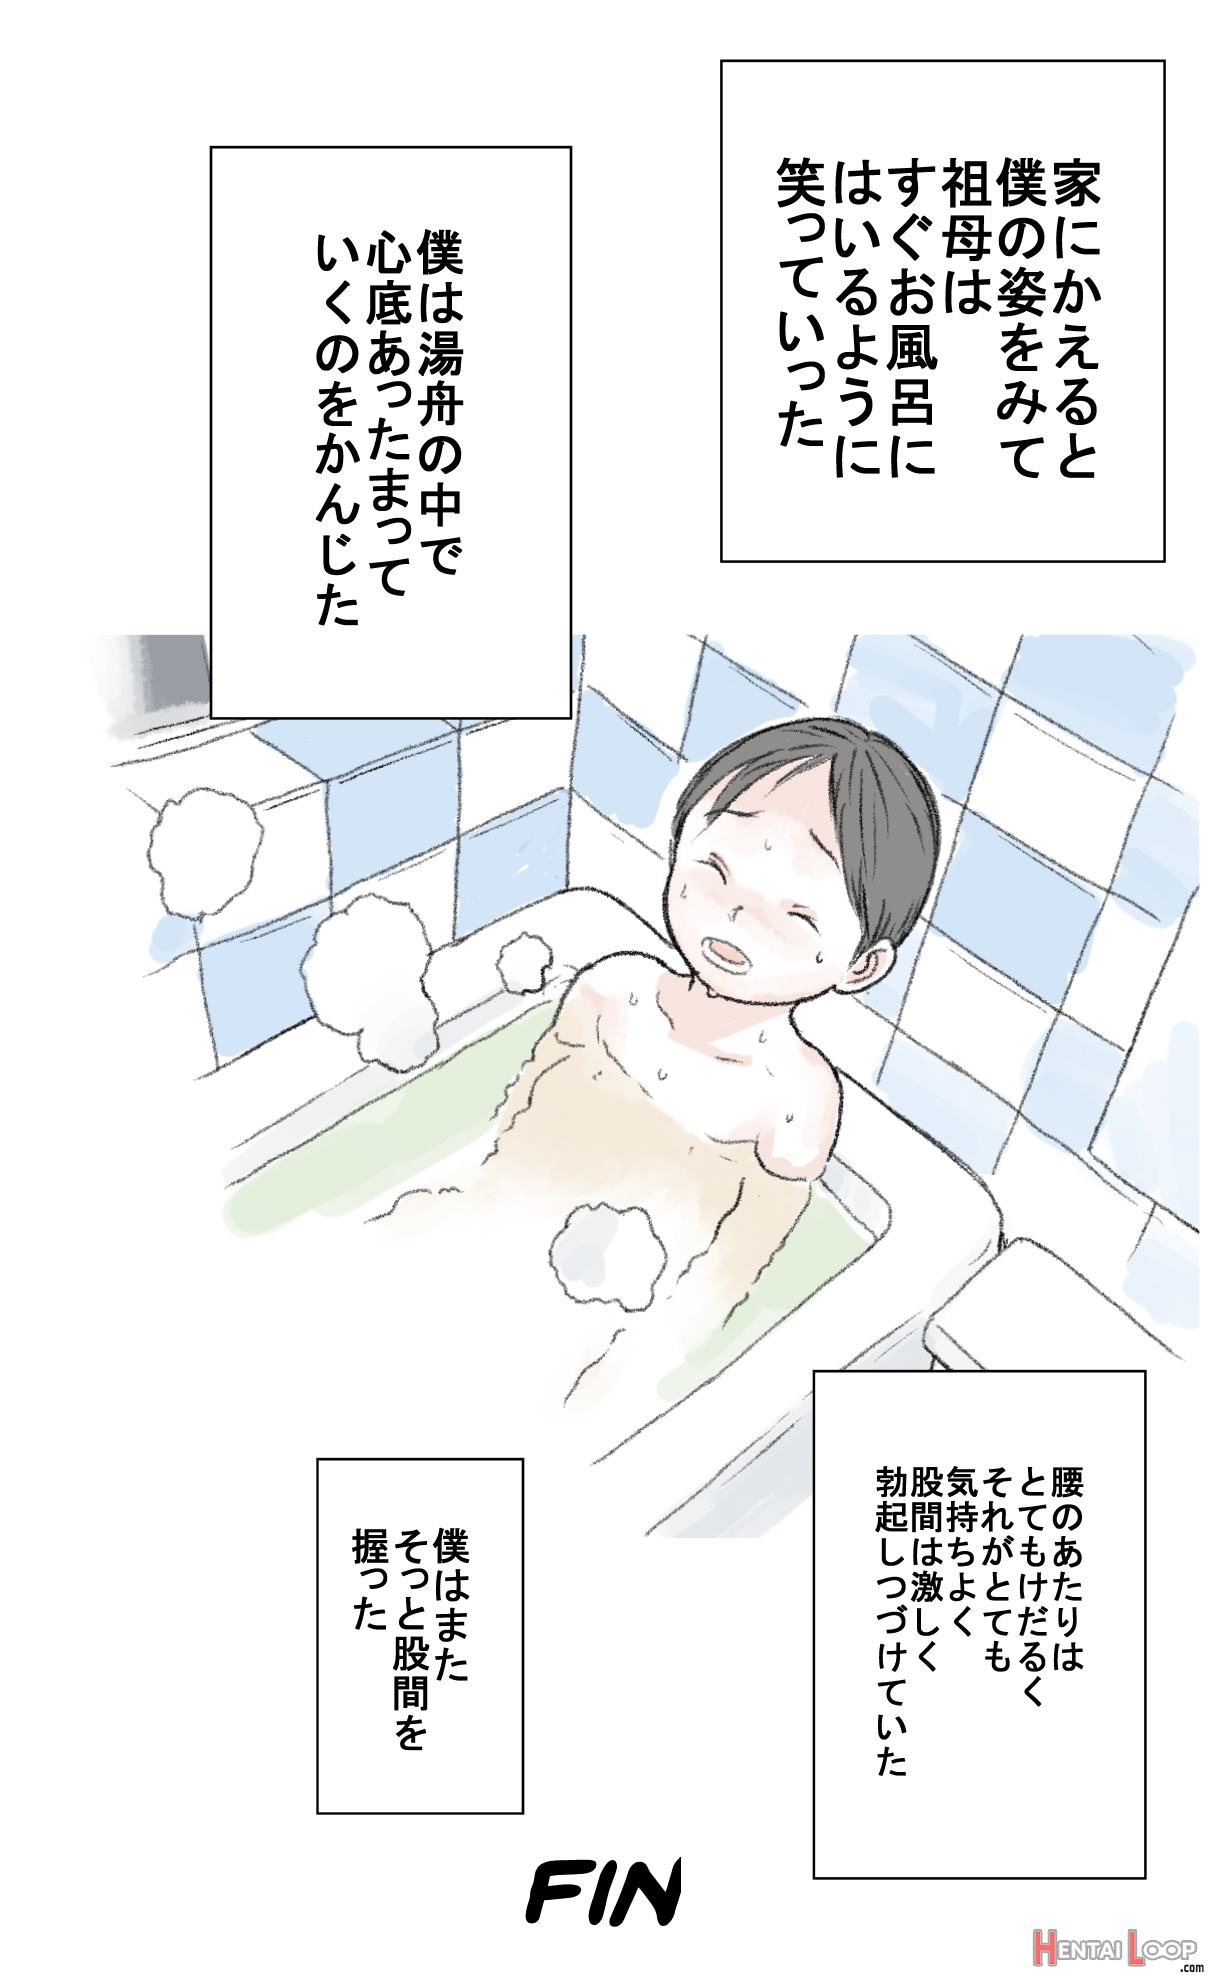 Kawaasobi page 7